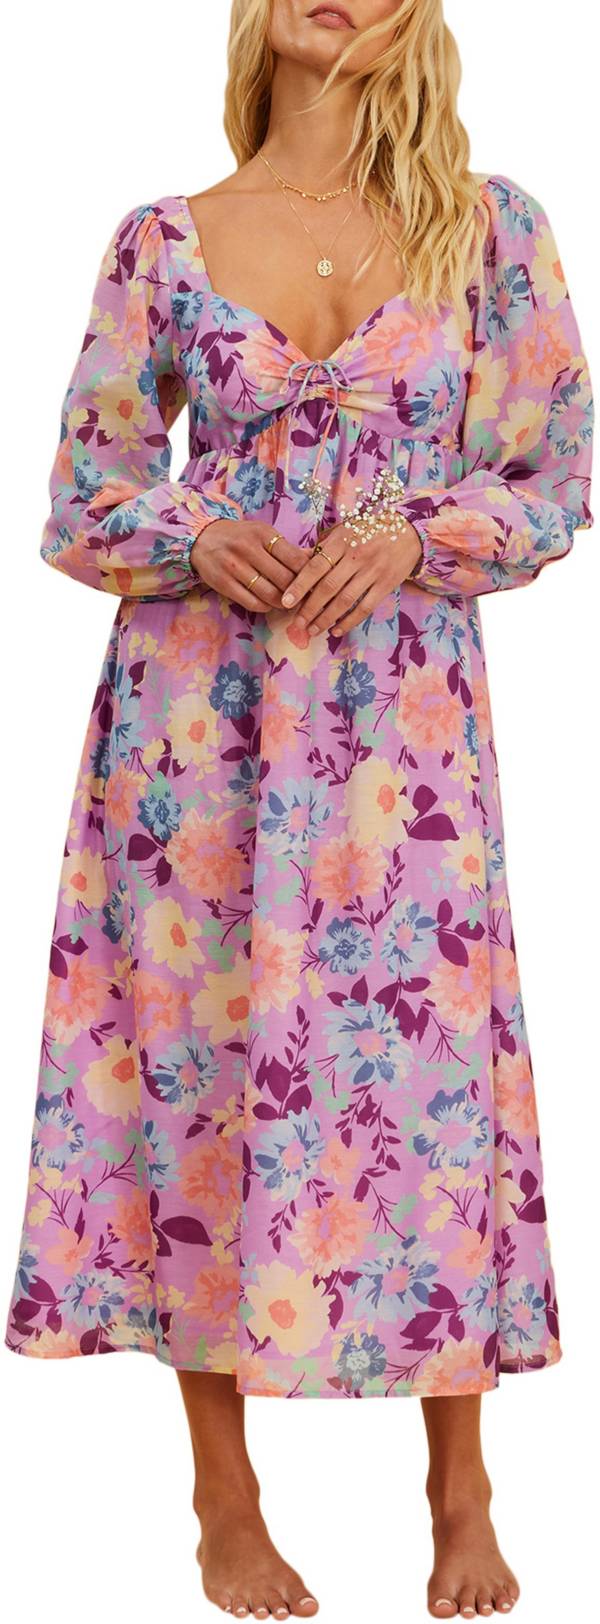 Billabong Women's Paradise Love Woven Dress product image